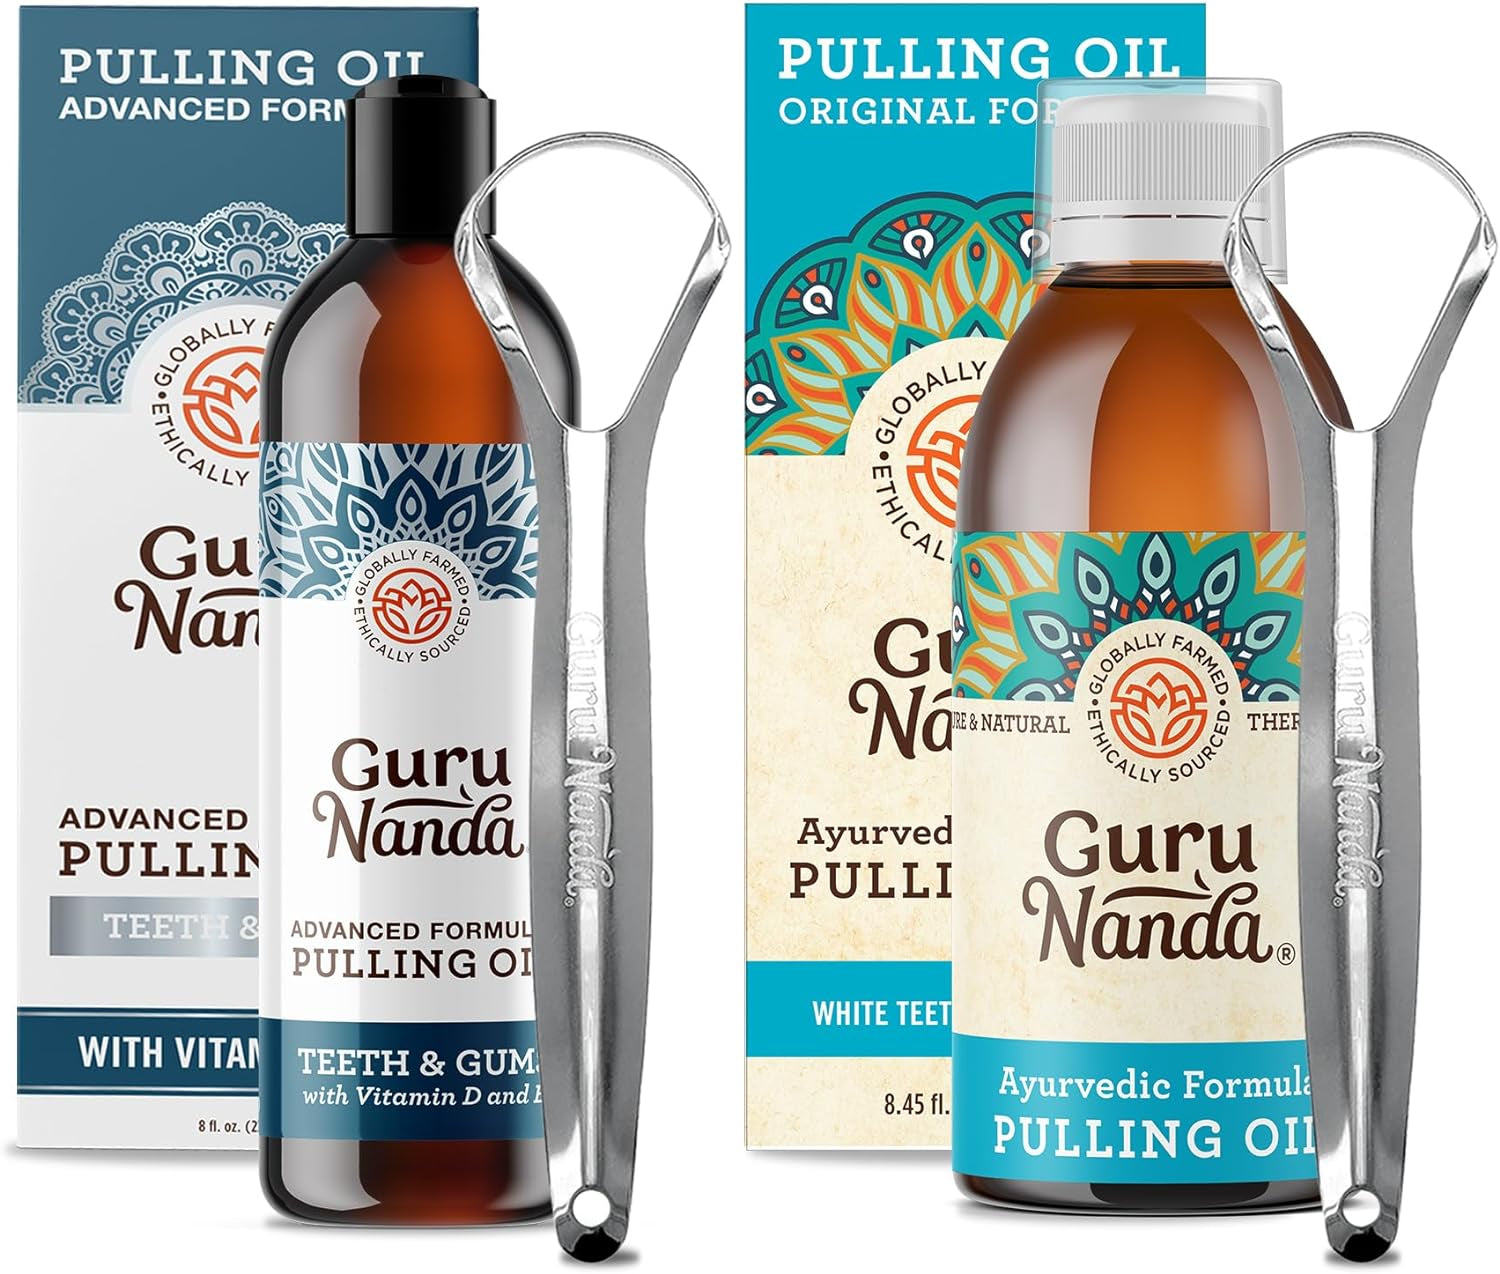 Original Oil Pulling Oil, Fluoride Free Vegan Natural Mouthwash & Advanced Formula Oil Pulling - Natural Coconut Oil Mouthwash with Essential Oils